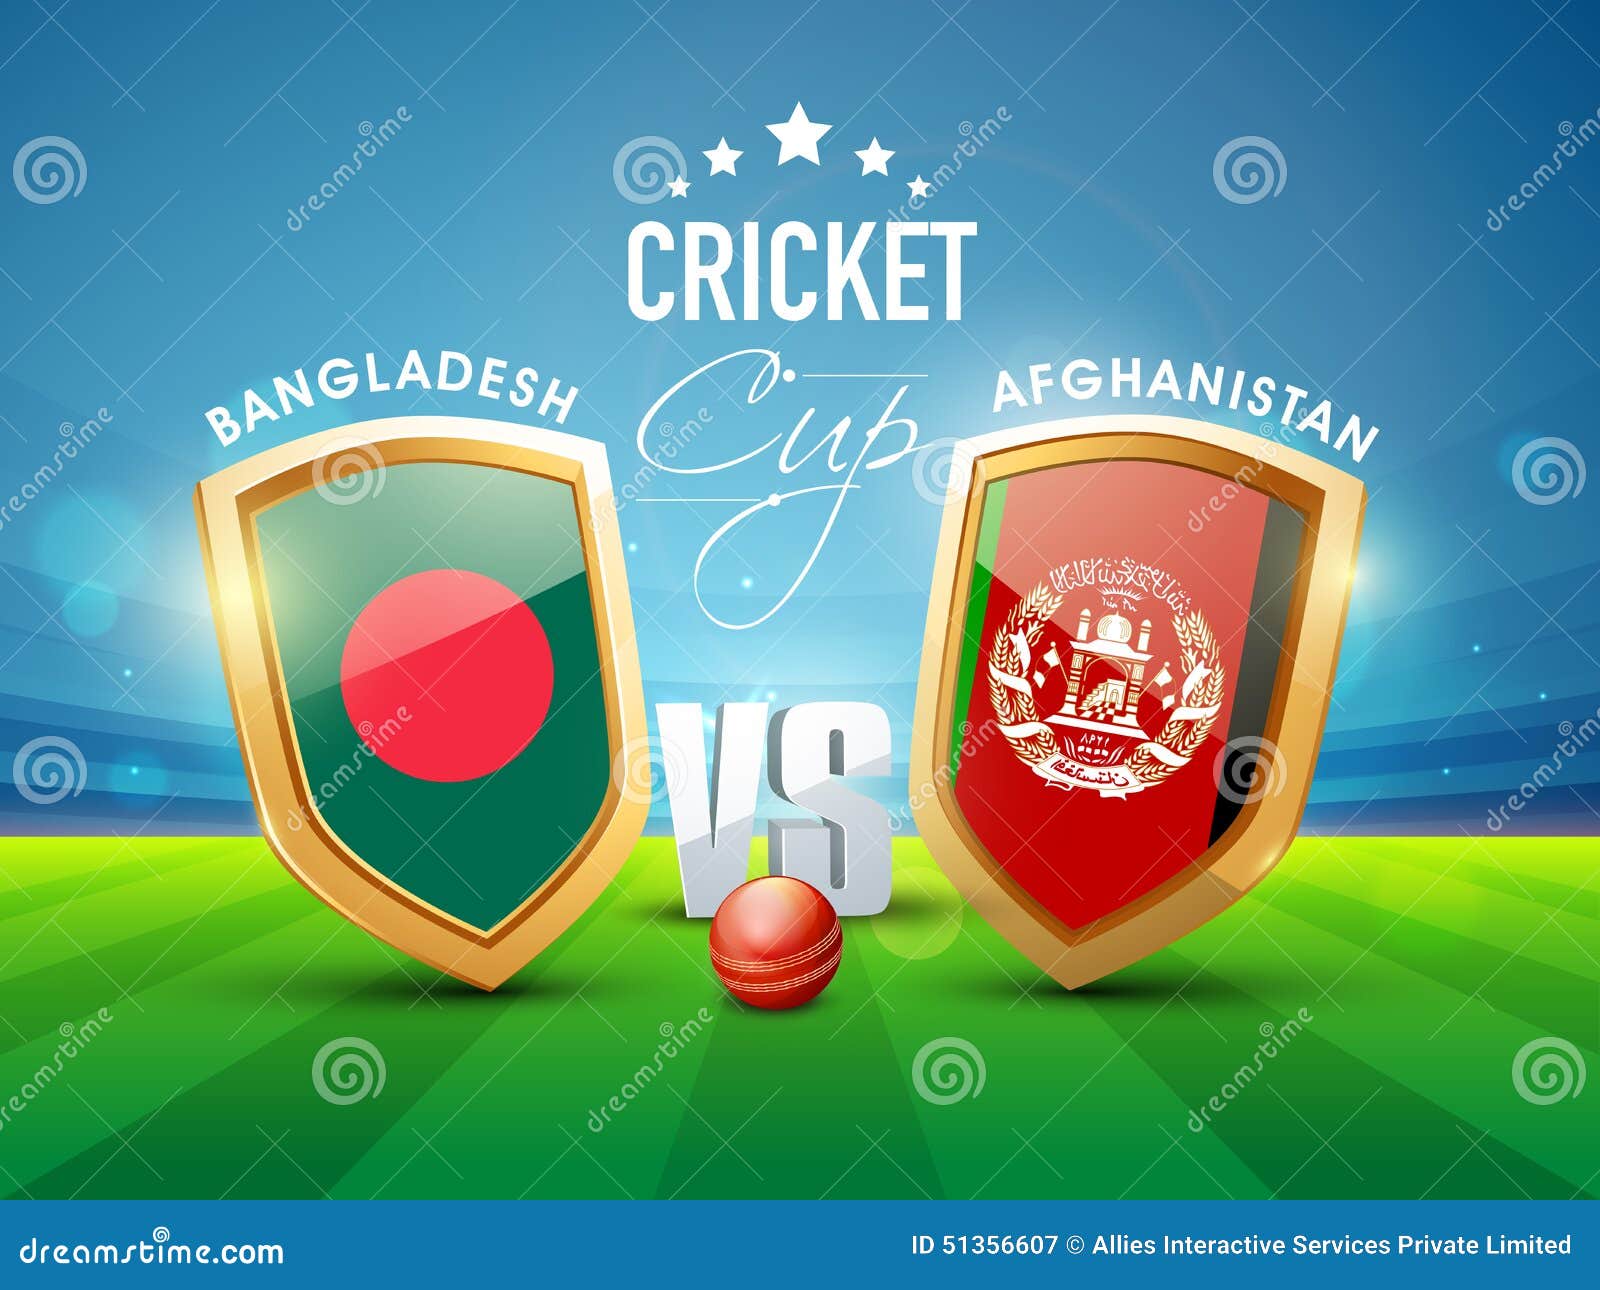 Bangladesh Vs Afghanistan Cricket Match Concept